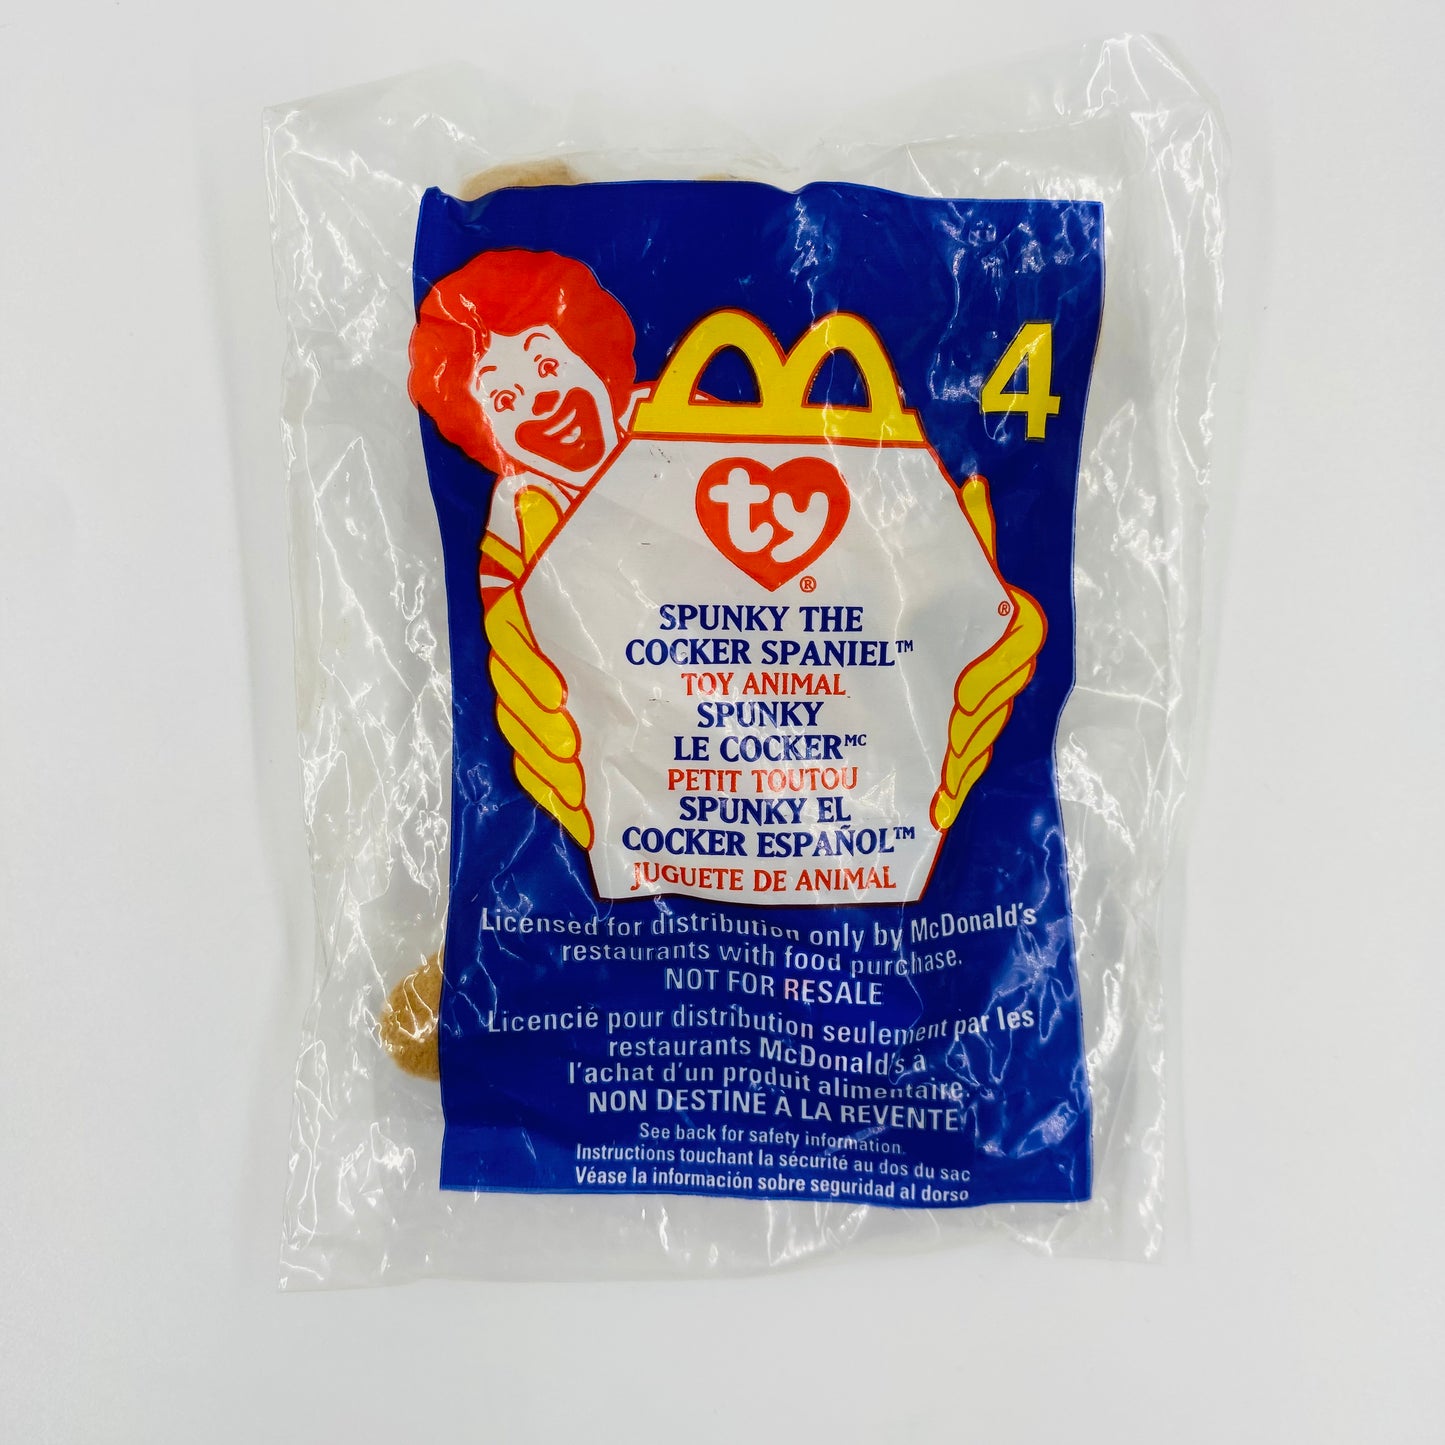 Teenie Beanie Babies Spunky the Cocker Spaniel McDonald's Happy Meal bean bag plush toy animal (1999) bagged